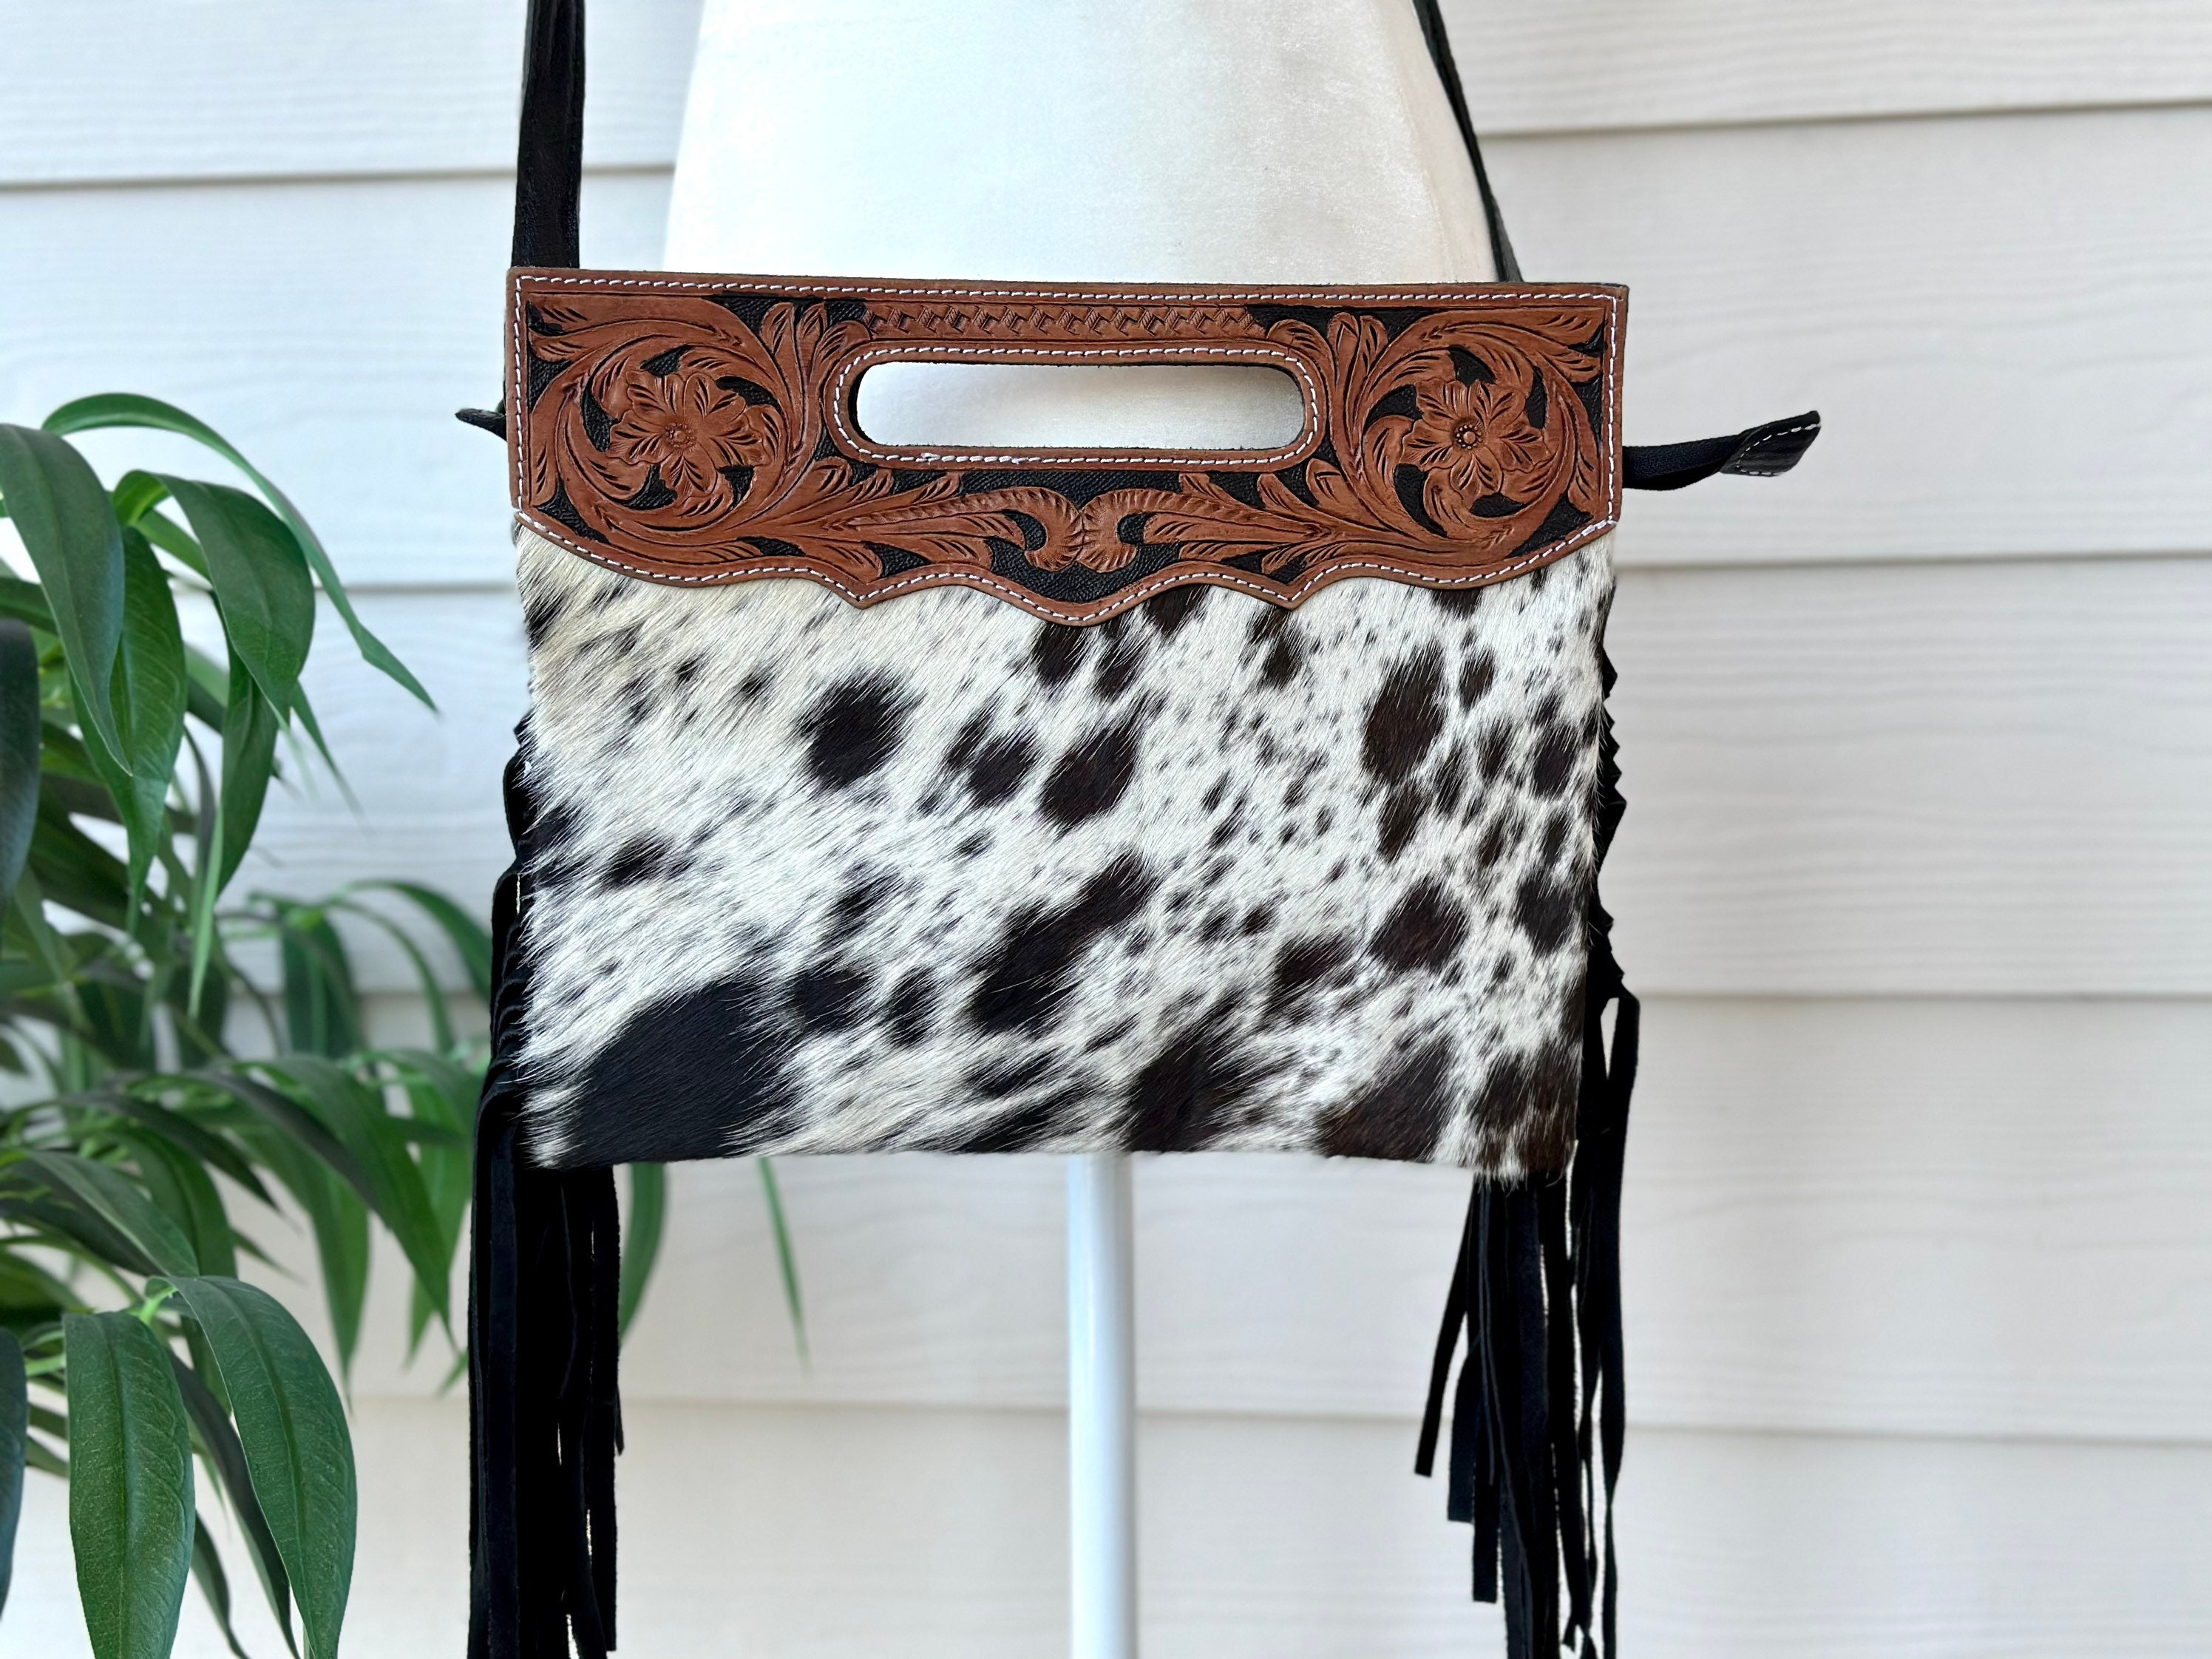 Cowprint Crossbody Bag  NWT Faux Leather Western Boho Animal Print Purse -  $37 (62% Off Retail) - From Cristina